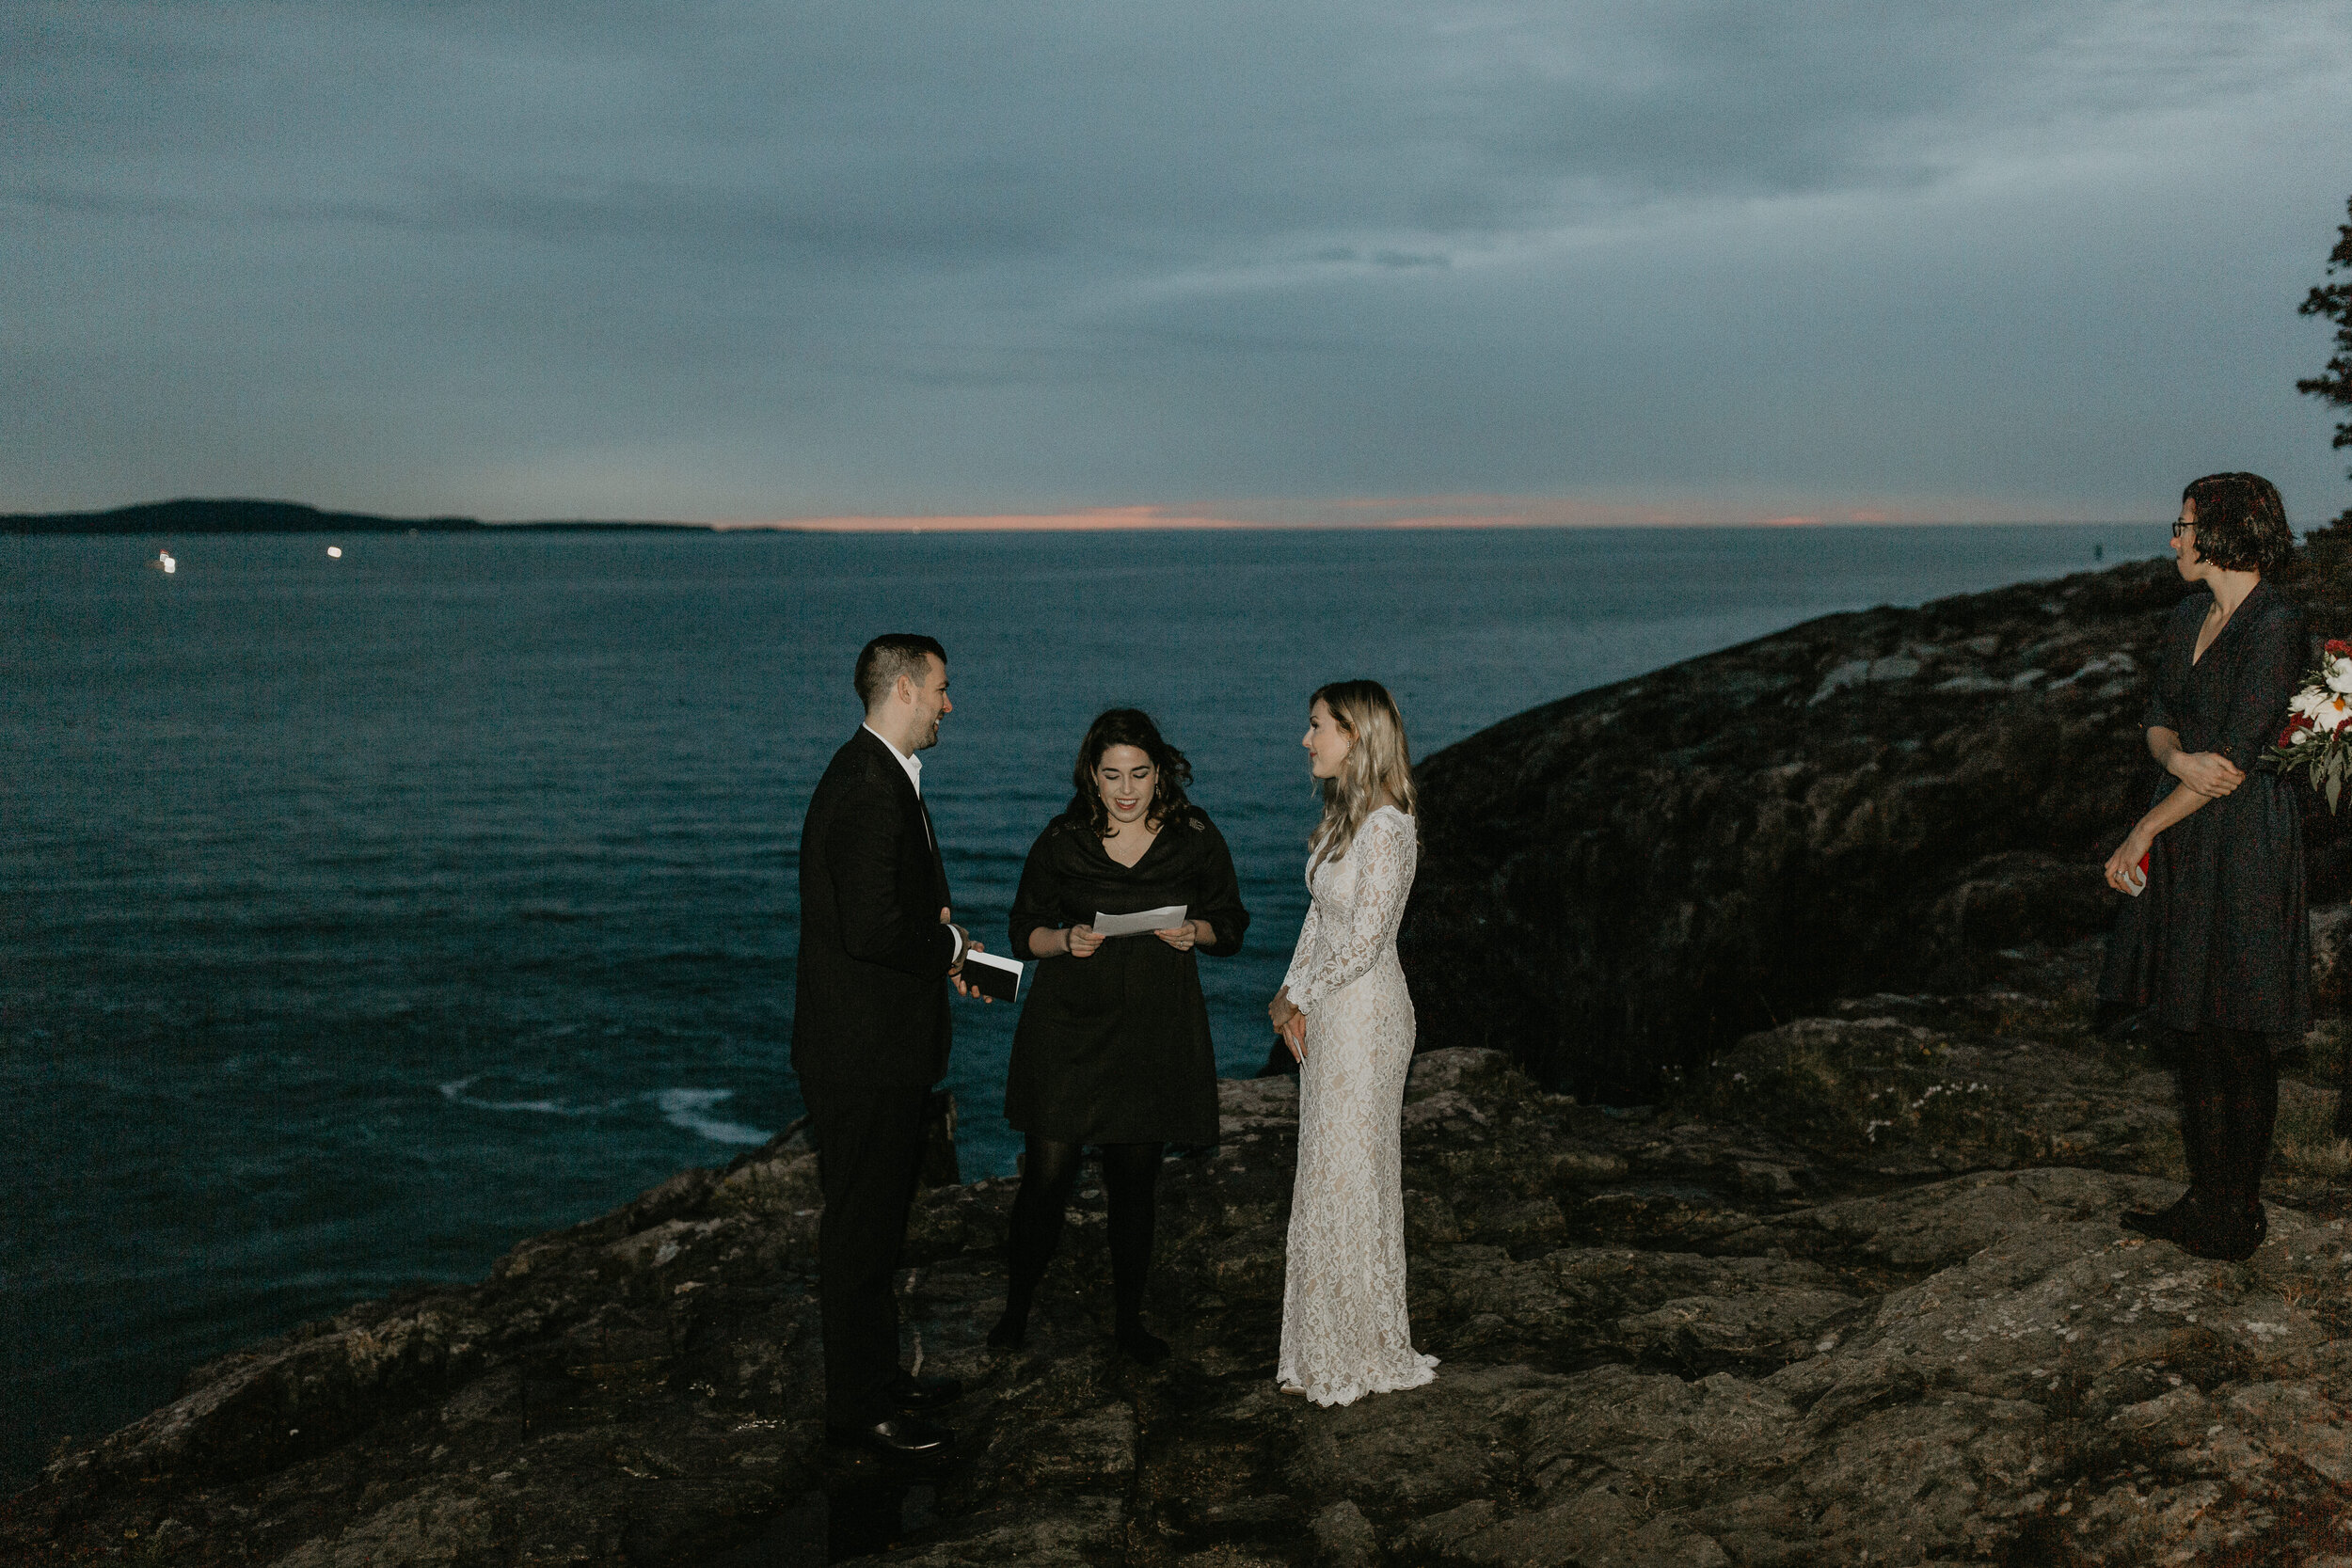 Nicole-Daacke-Photography-Acadia-national-park-elopement-photography-elopement-in-acadia-inspiration-maine-intimate-wedding-destination-elopement-photographer-rainy-day-maine-coast-bar-harbor-elopement-photography-103.jpg